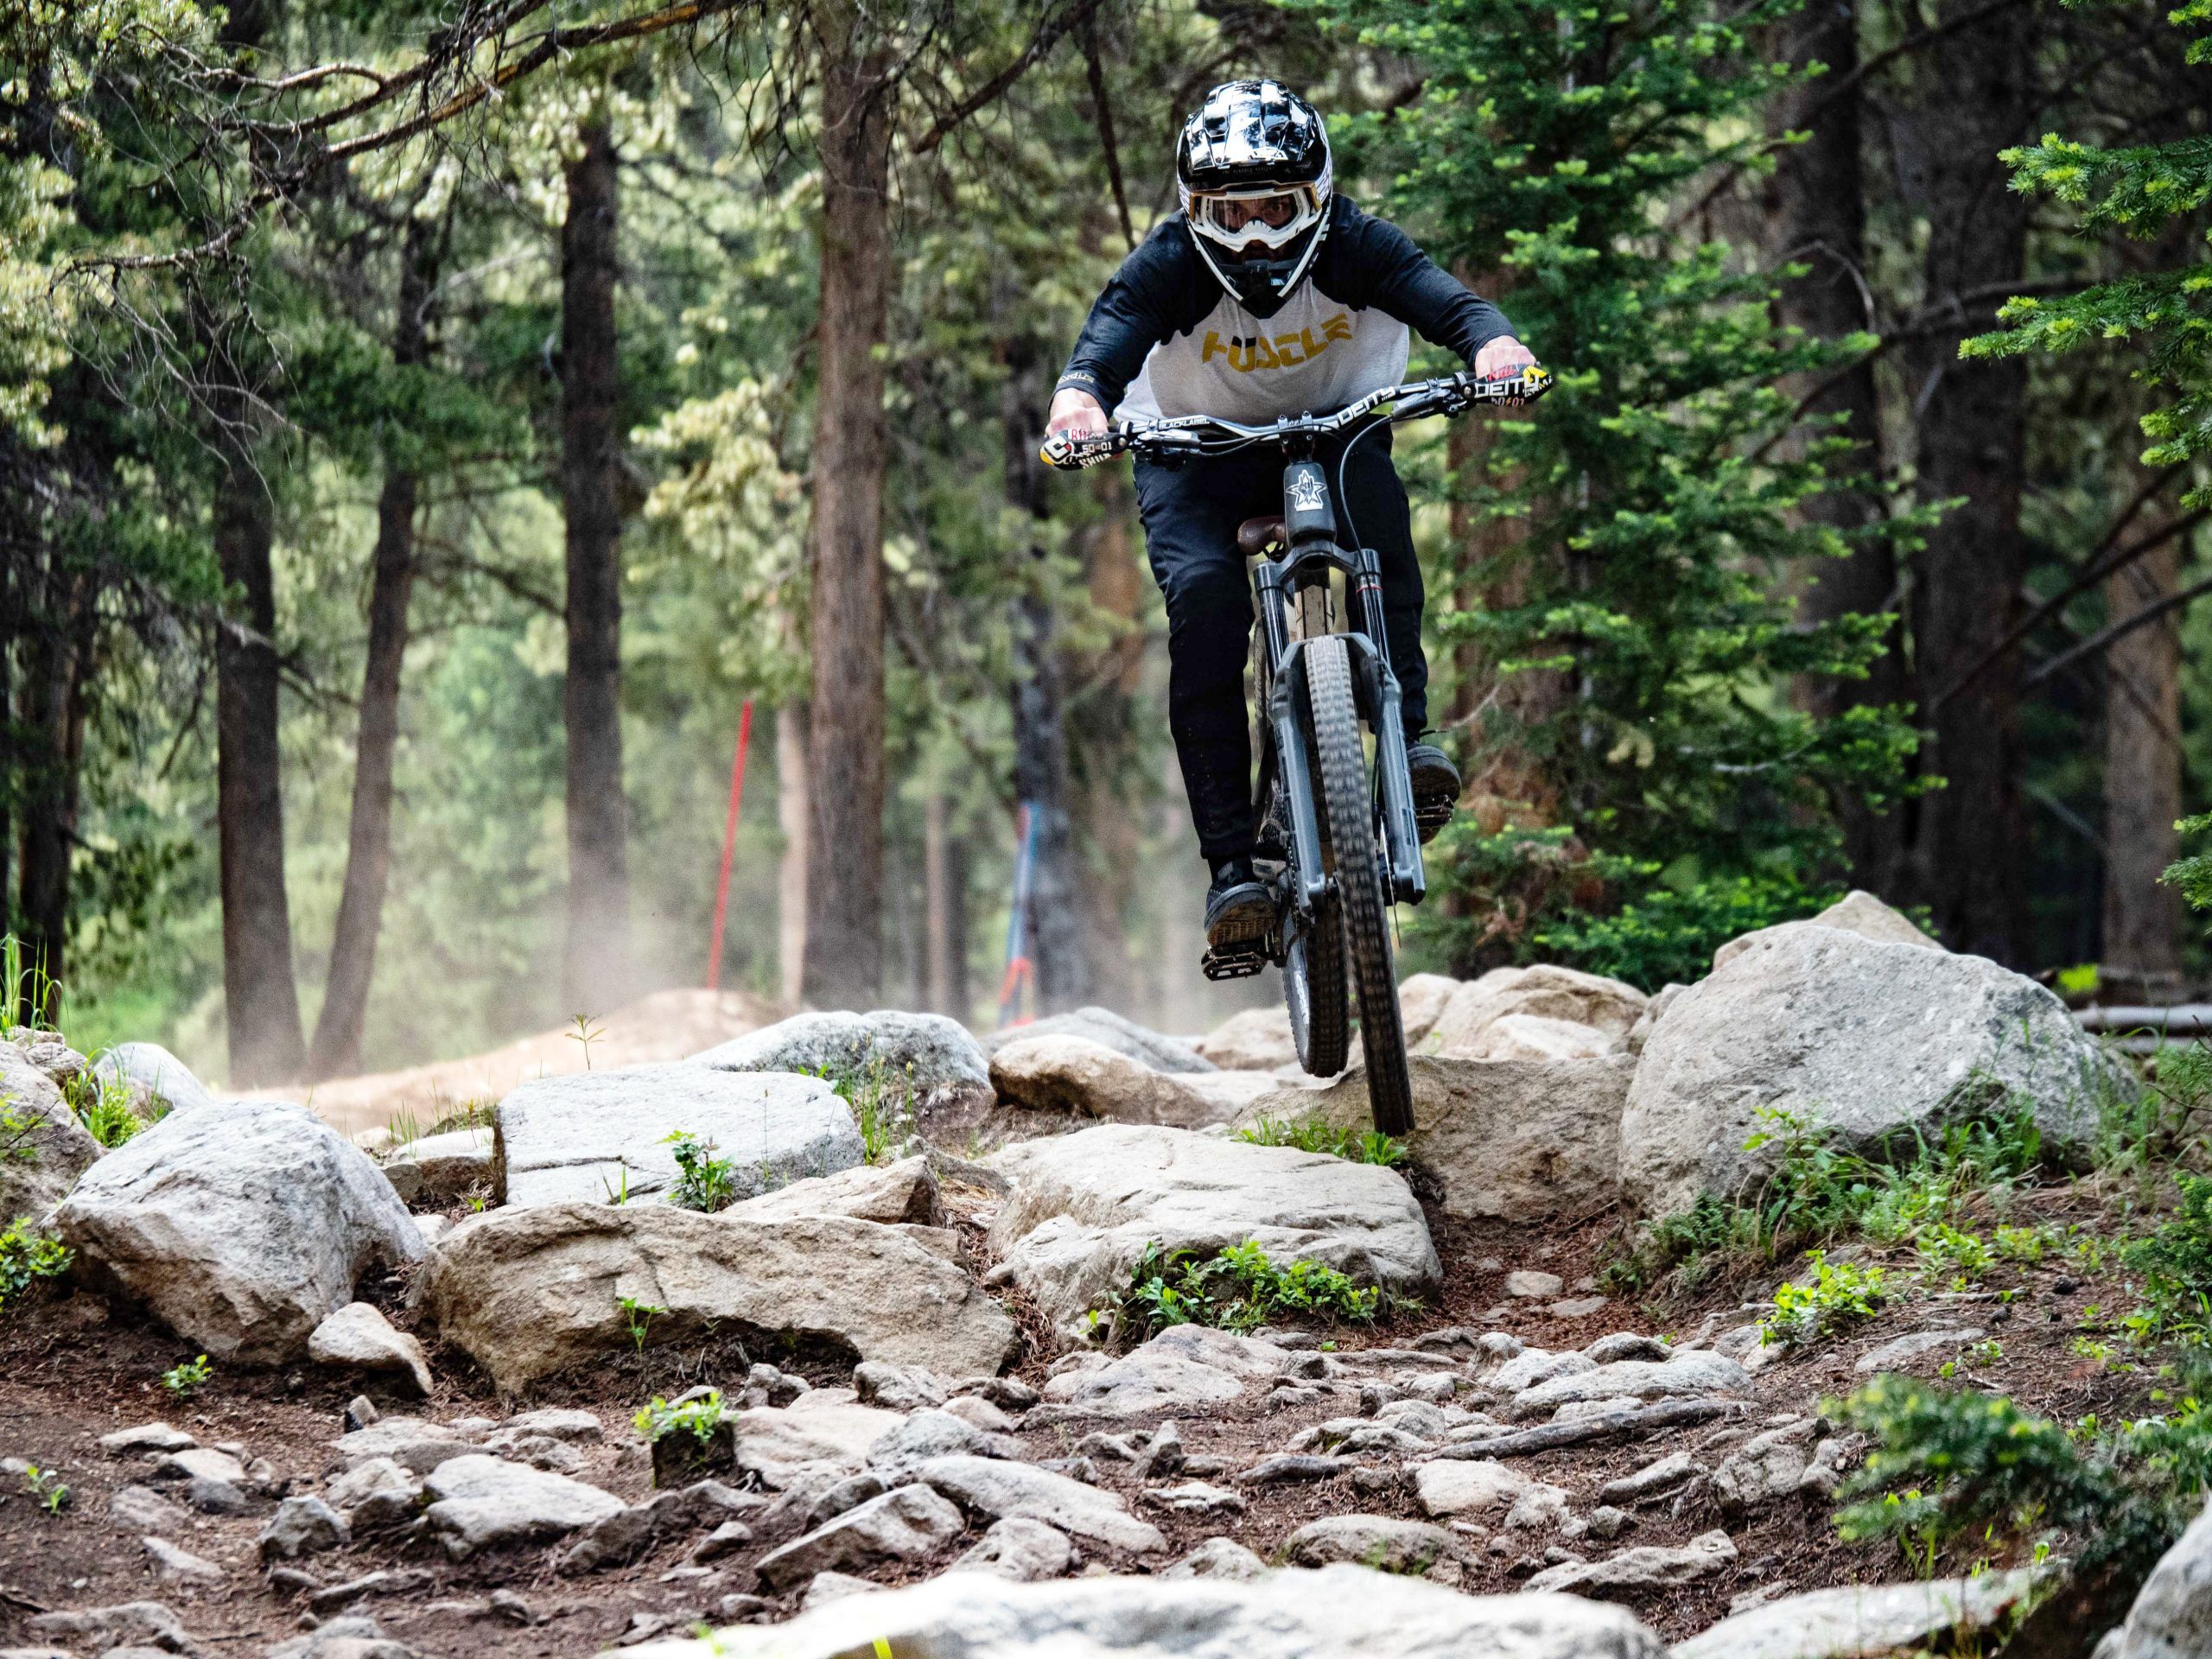 A mountain biker in a full-face helmet rides through a rock garden on the Crested Butte Mountain Bike Park Trails.